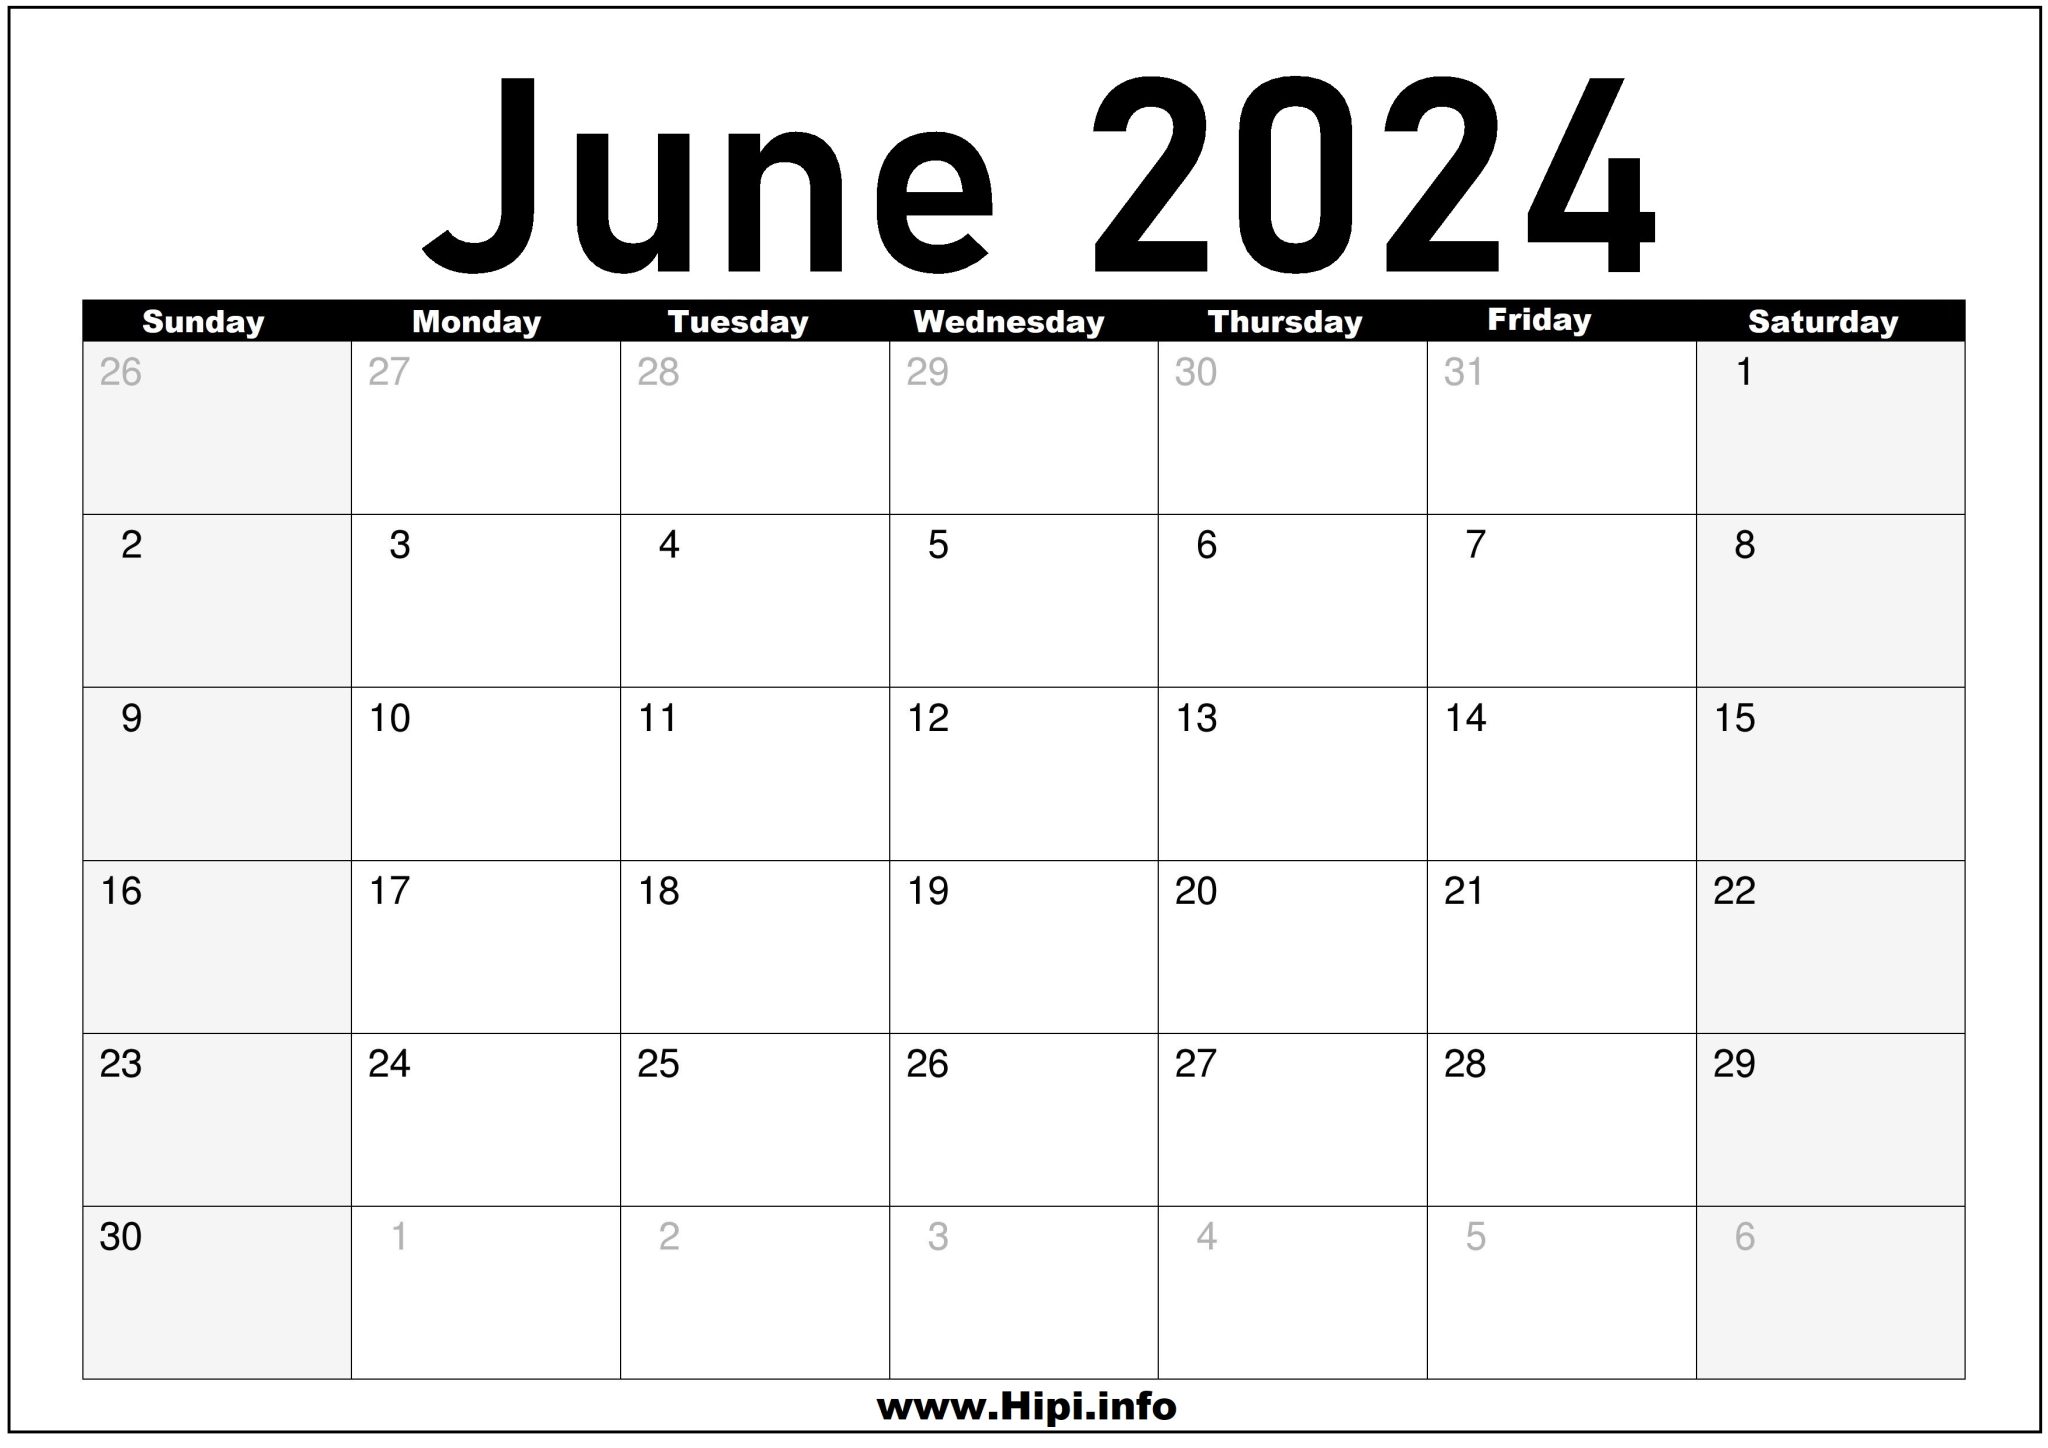 June 2024 Monthly Calendar Hipi.info